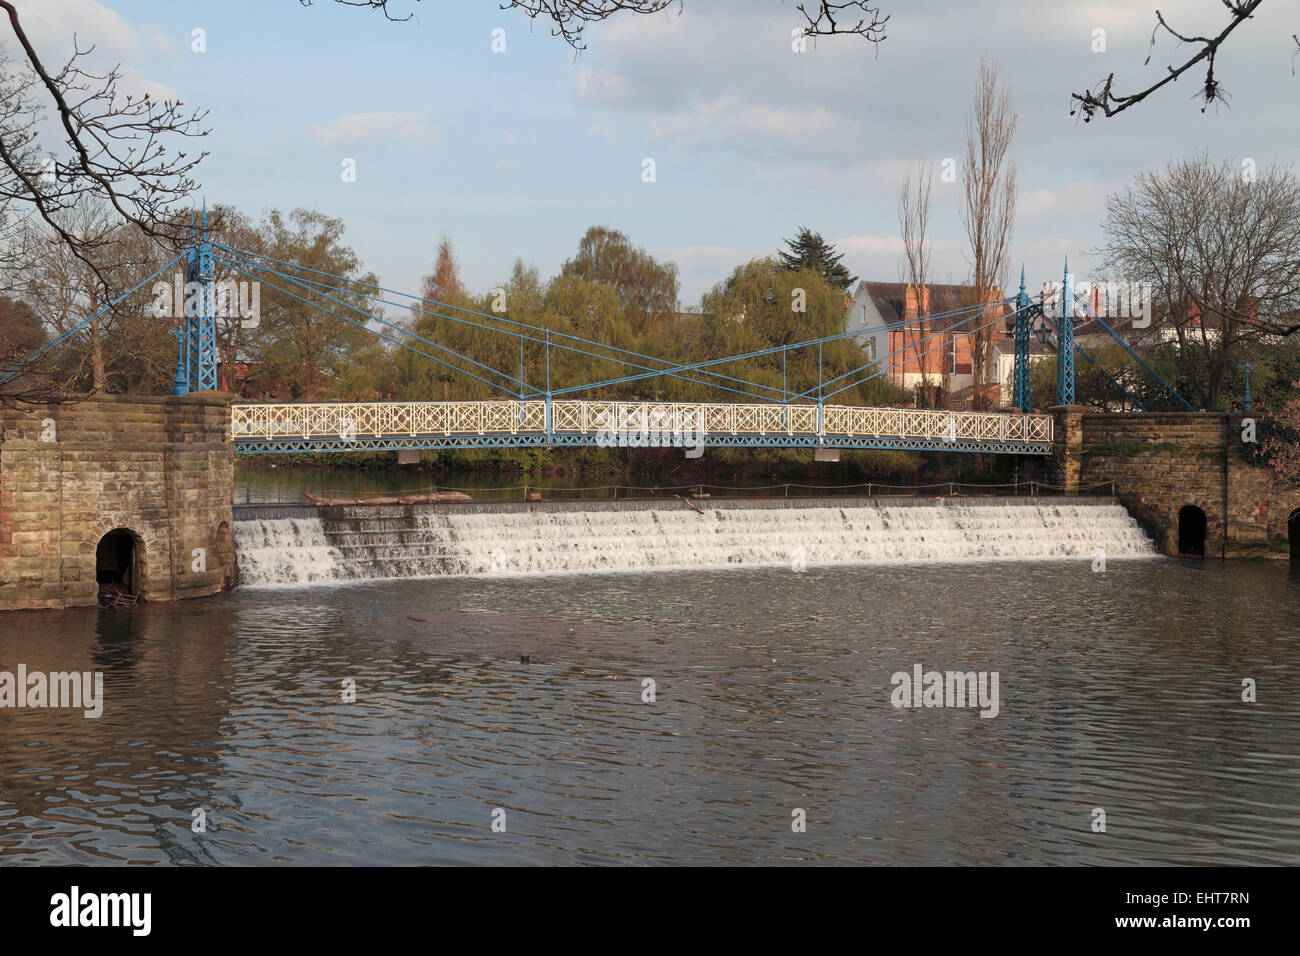 Weir & puente peatonal en el centro de Jephson Gardens & Mill Gardens, Royal Leamington Spa, Warwickshire, Inglaterra. Foto de stock